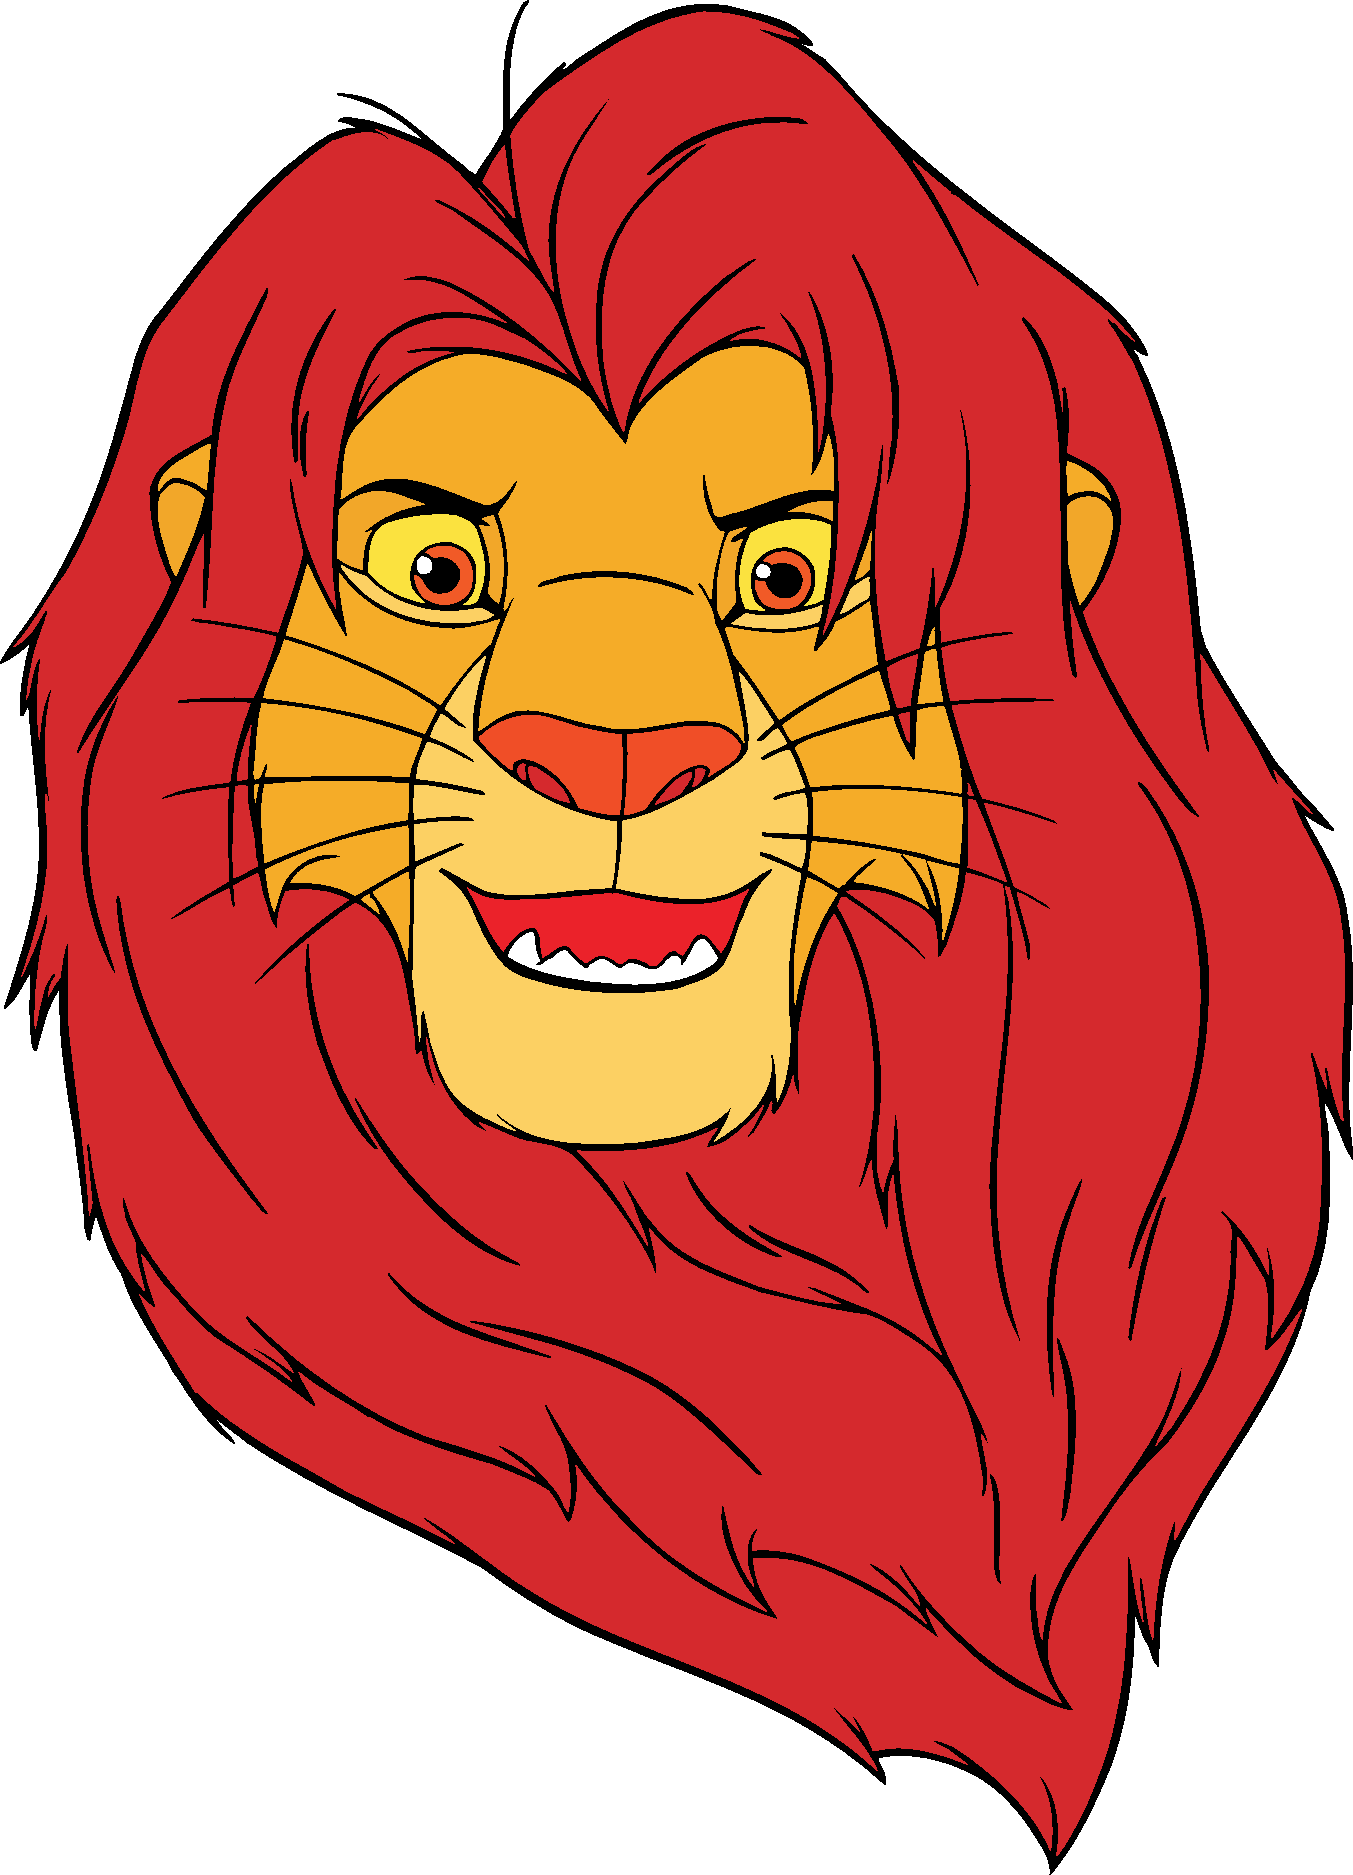 Lion King logo stock vector. Illustration of brand, head - 201147449